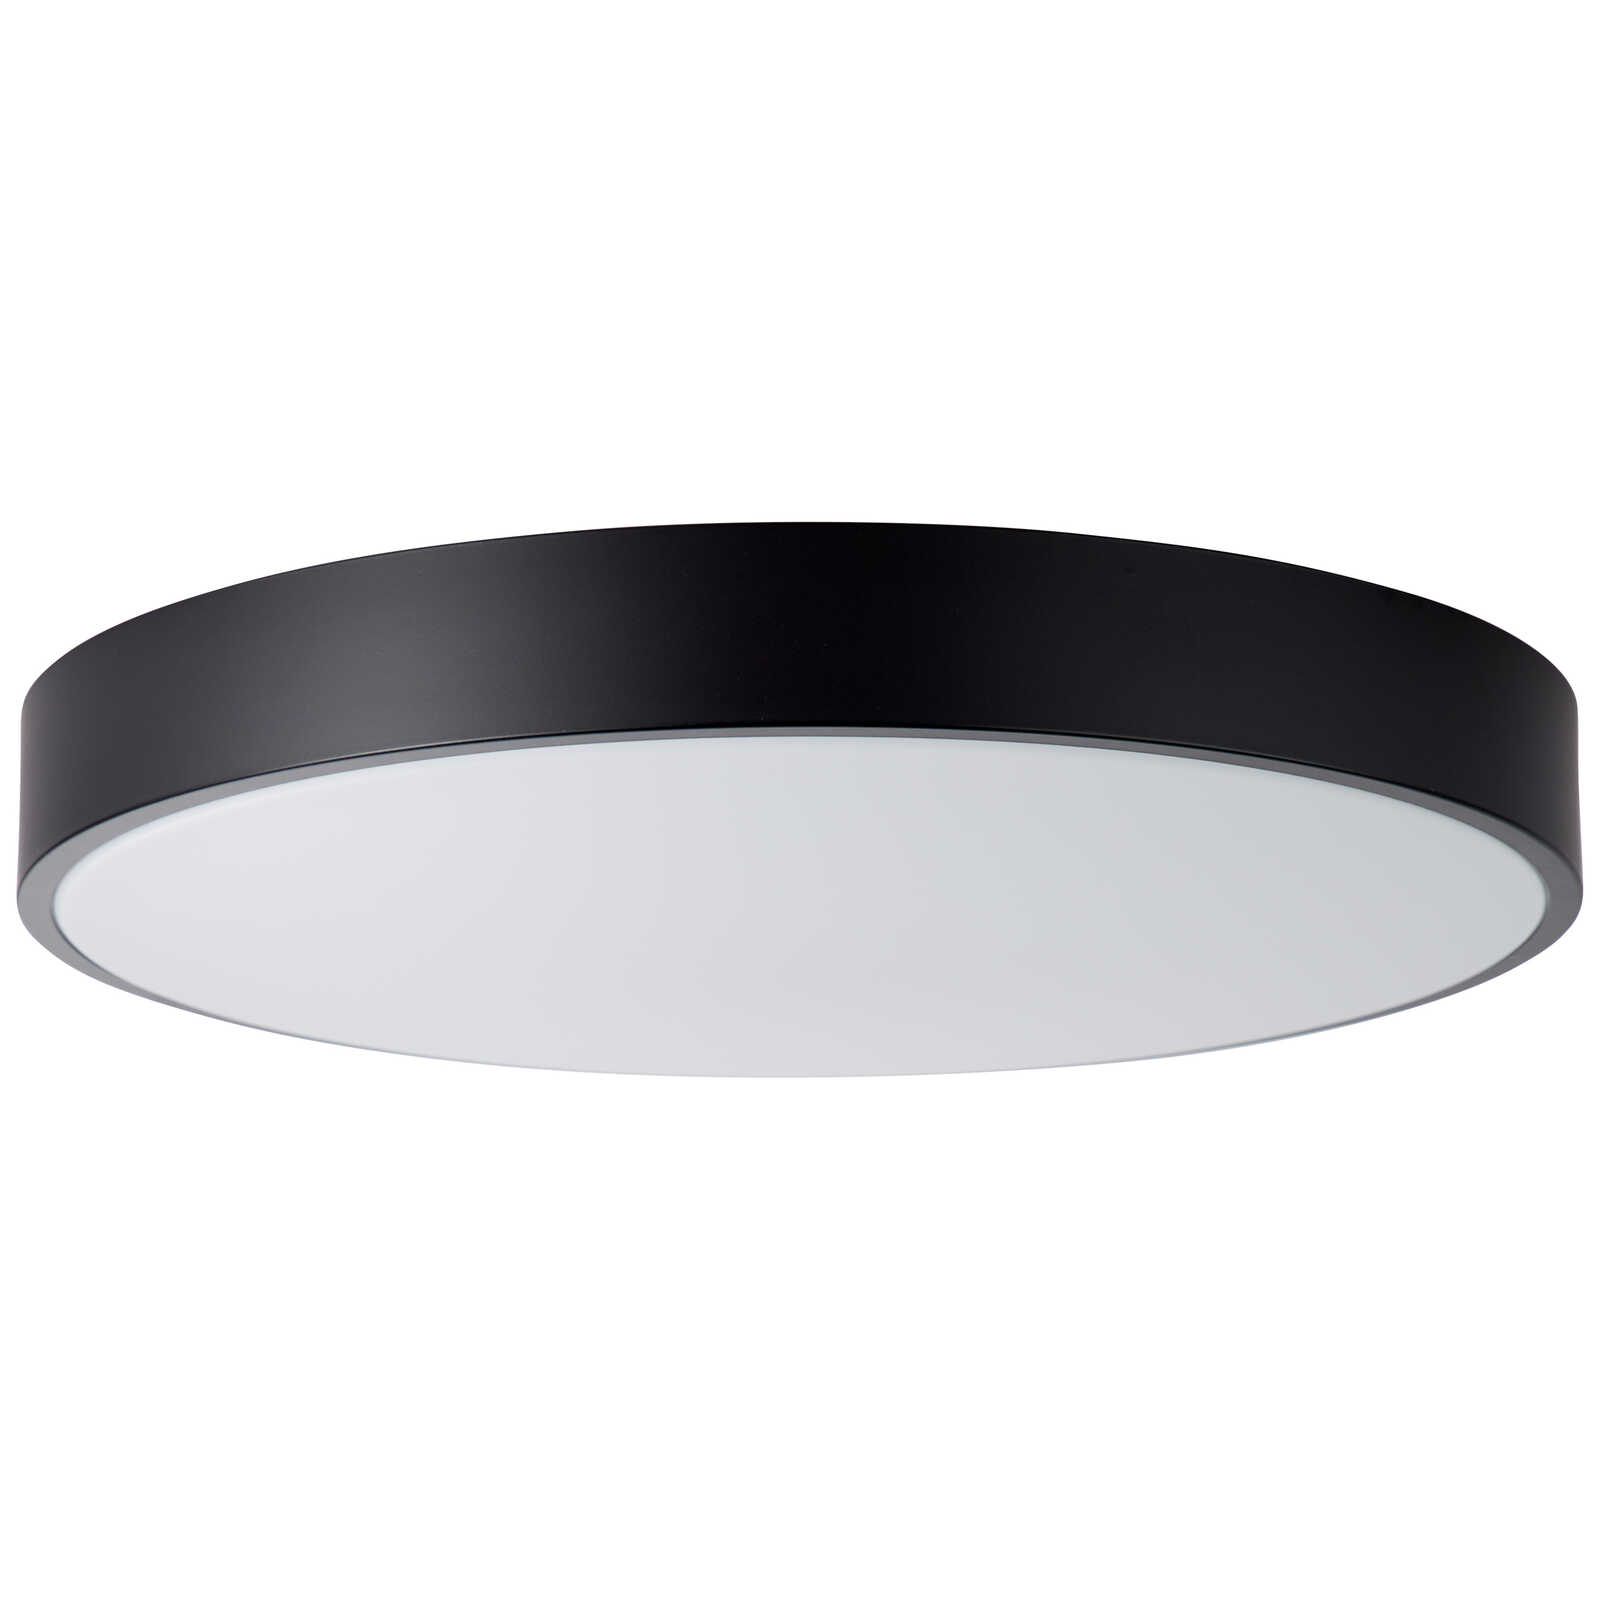             Plastic ceiling light - Niklas 8 - Black
        